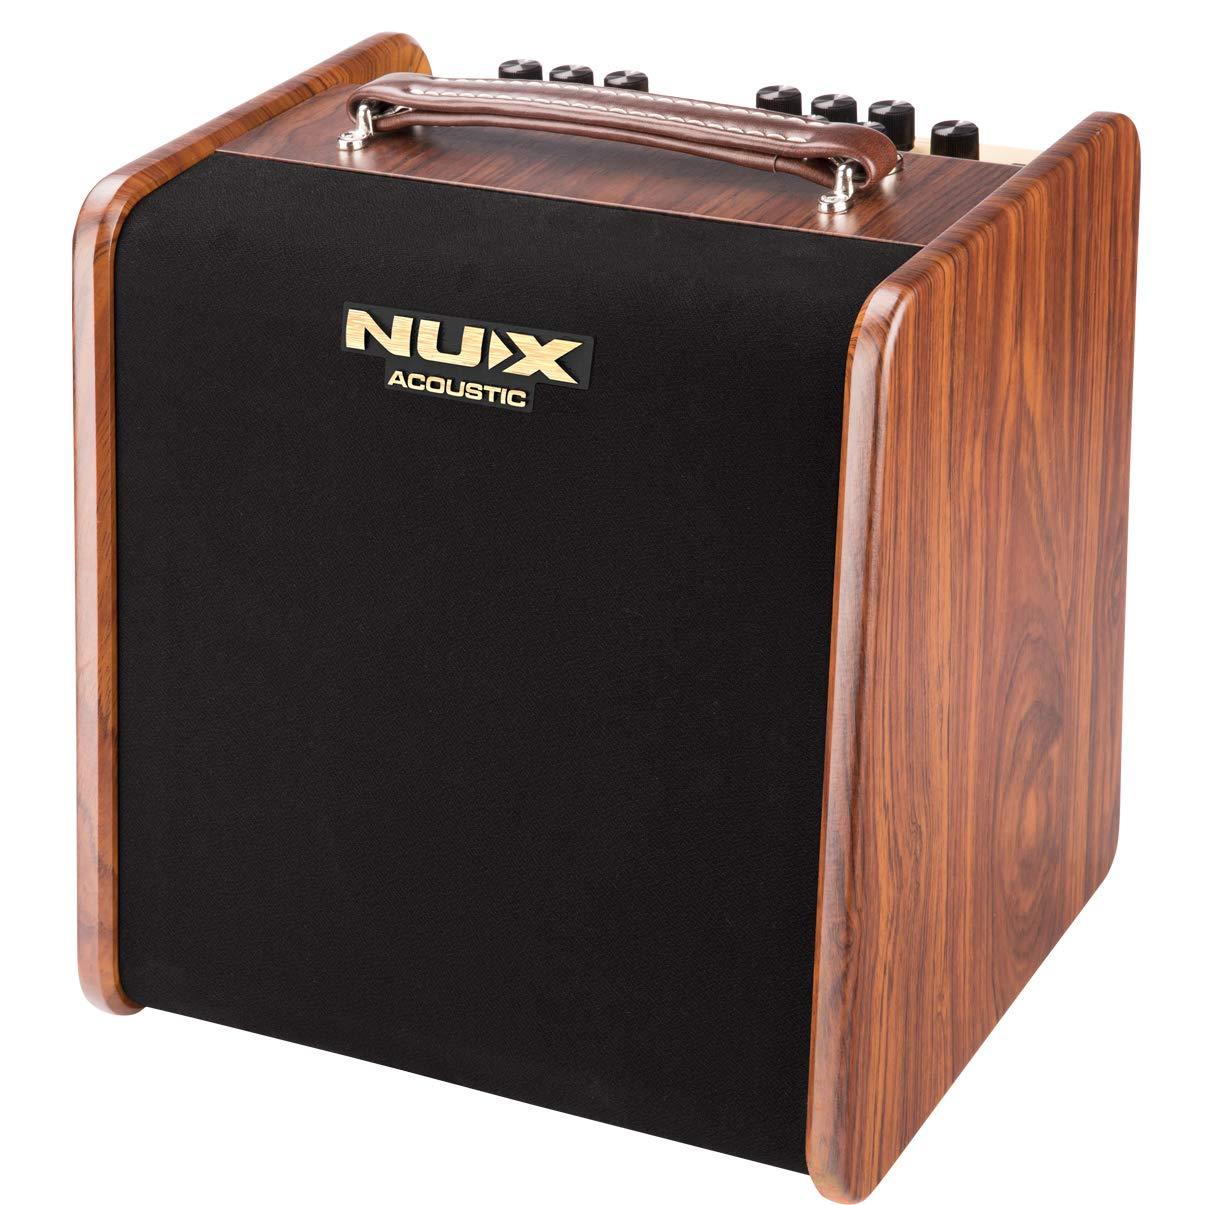 NUX STAGEMAN AC50 ACOUSTIC GUITAR AMP W/ DIGITAL FX